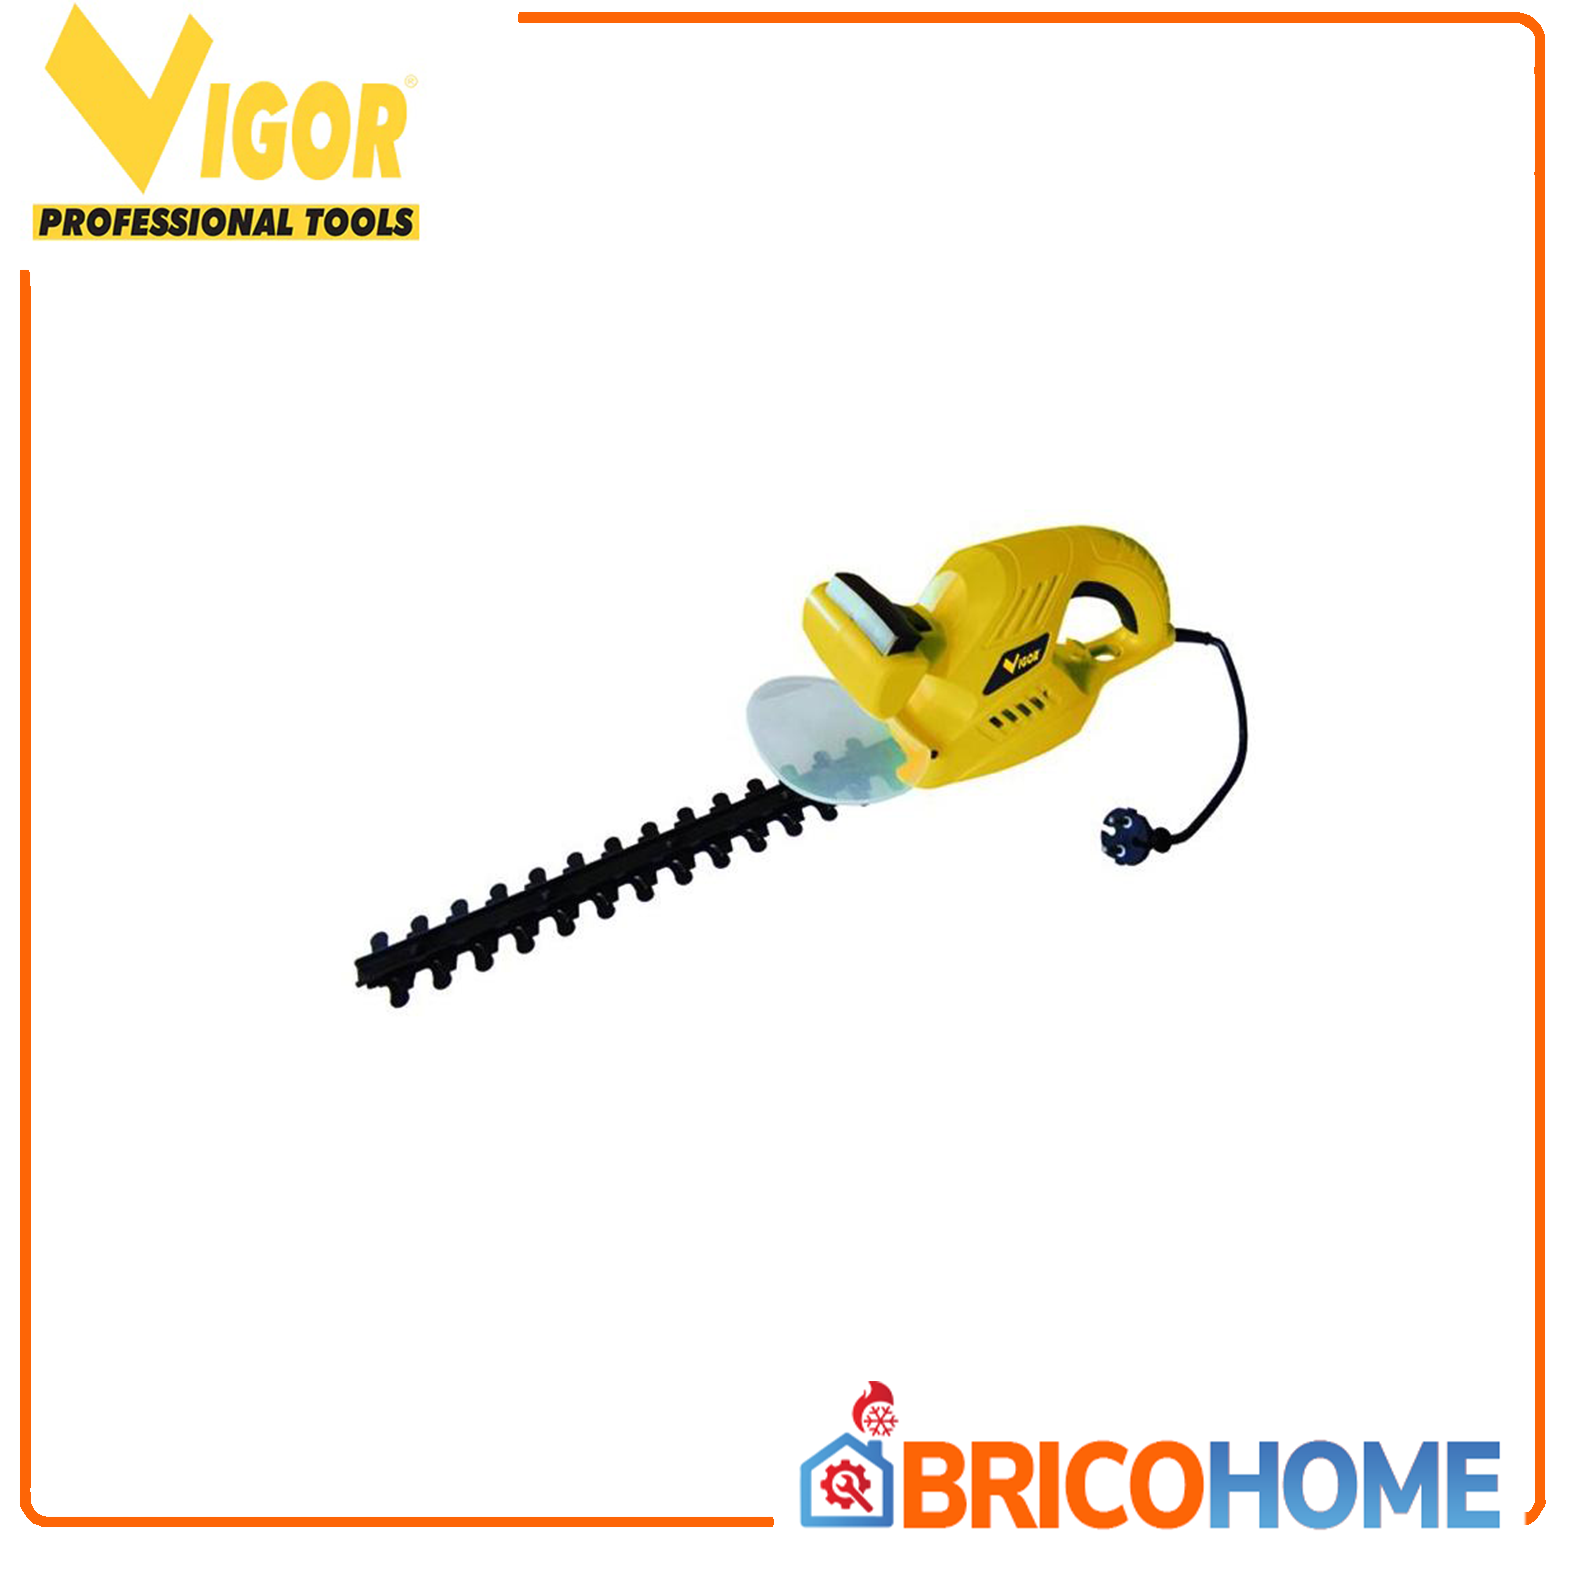 VIGOR “VTS-510” electric hedge trimmer